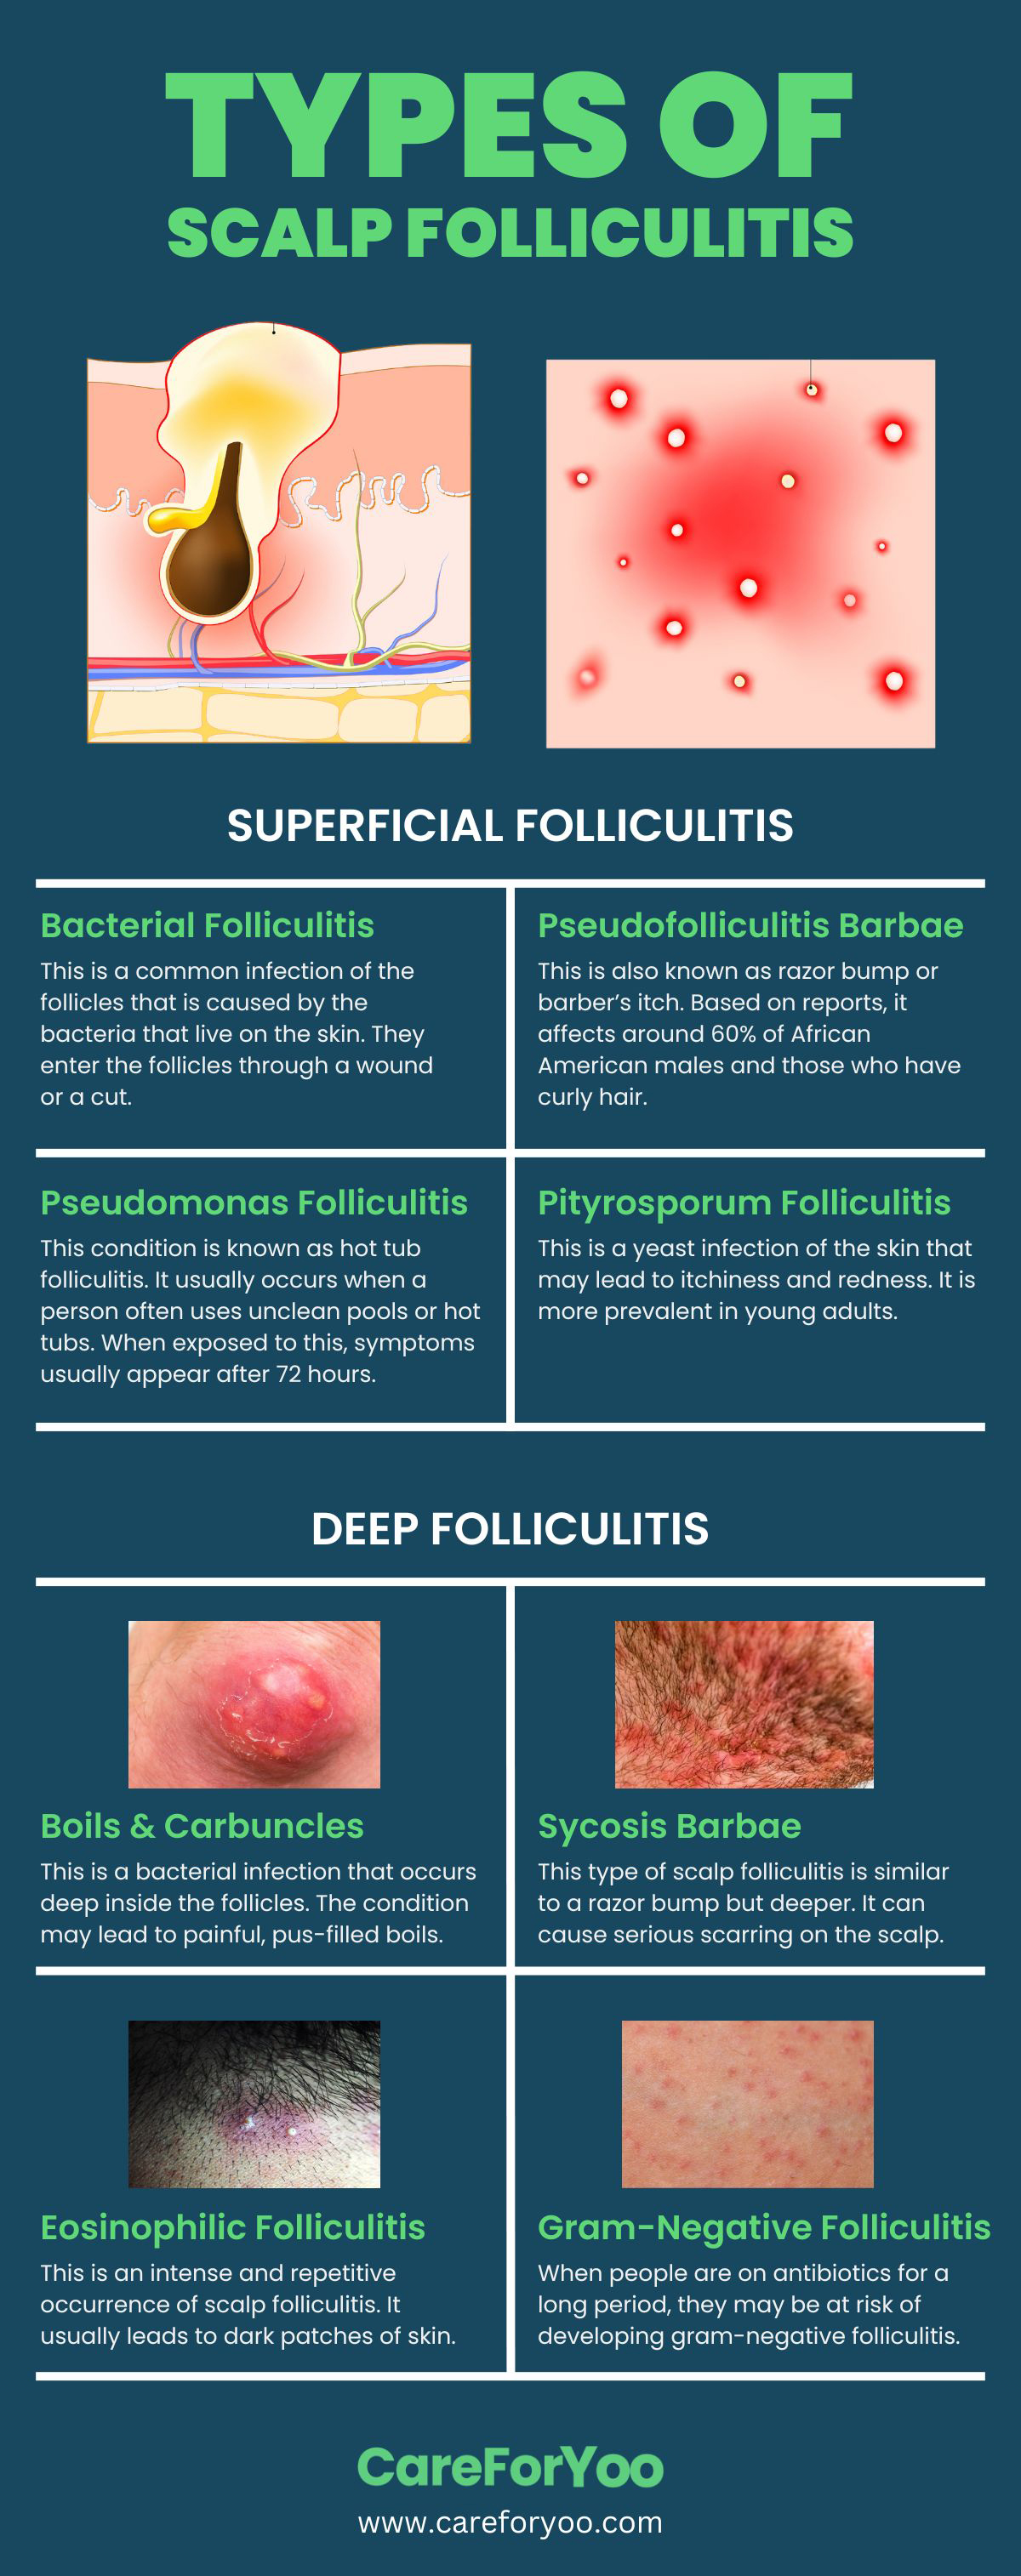 Types of Scalp Folliculitis